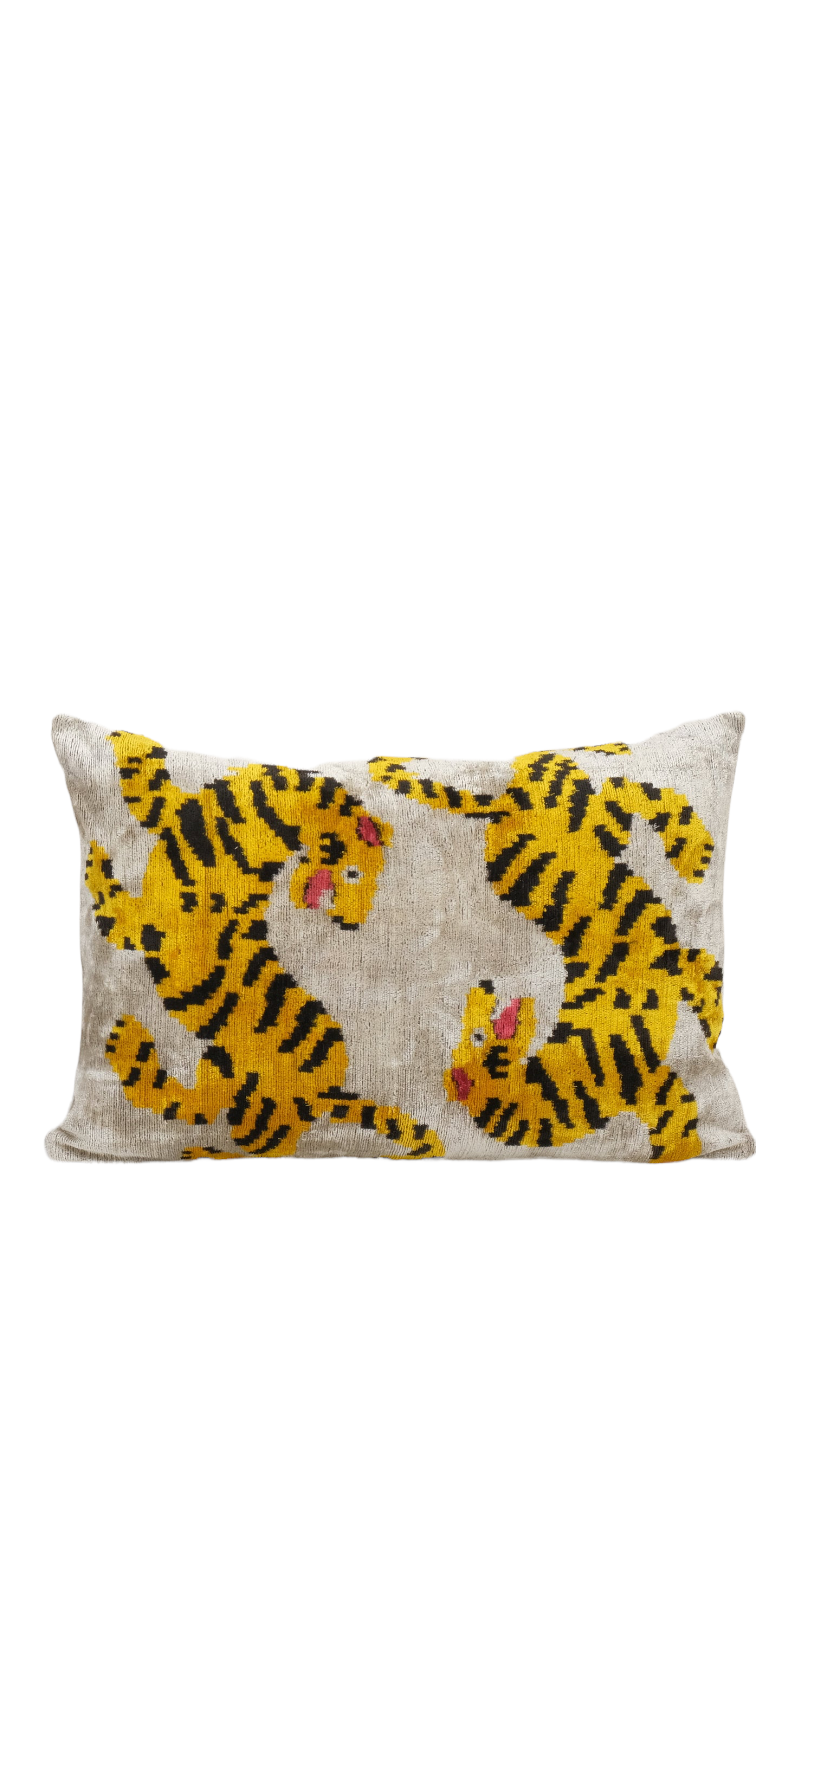 AYCA DESIGN - Silk Velvet Ikat Pillow Cover - Lucette Collection